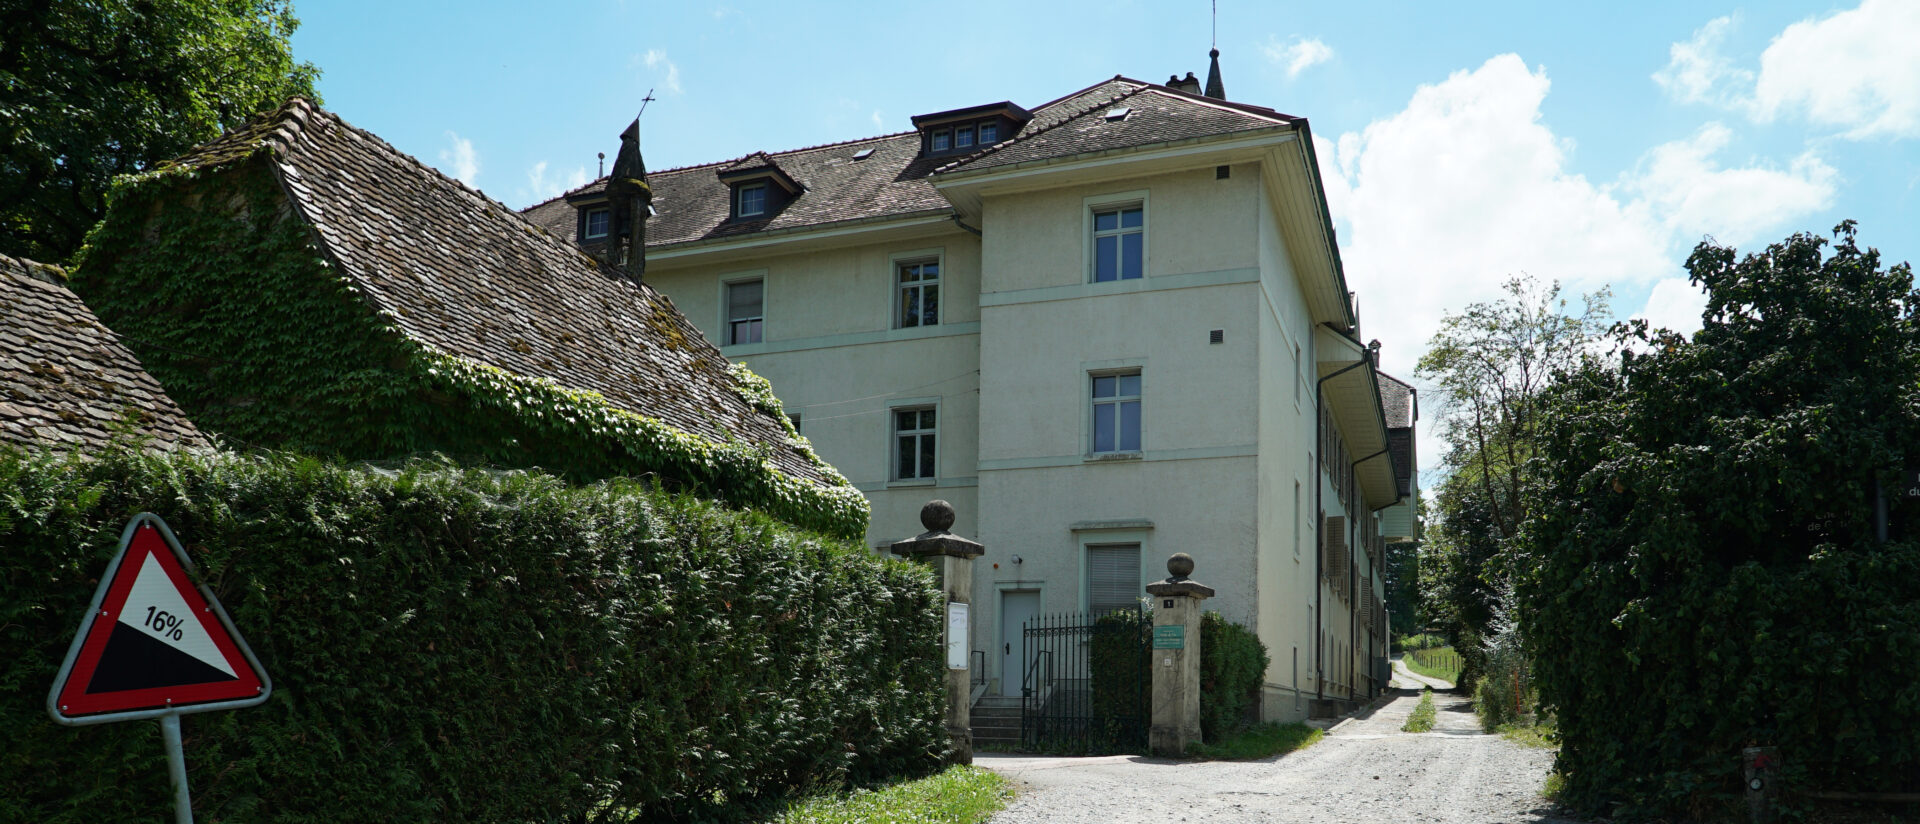 The Saint-Dominique house in Pensier - Headquarters of the Verbe de Vie community